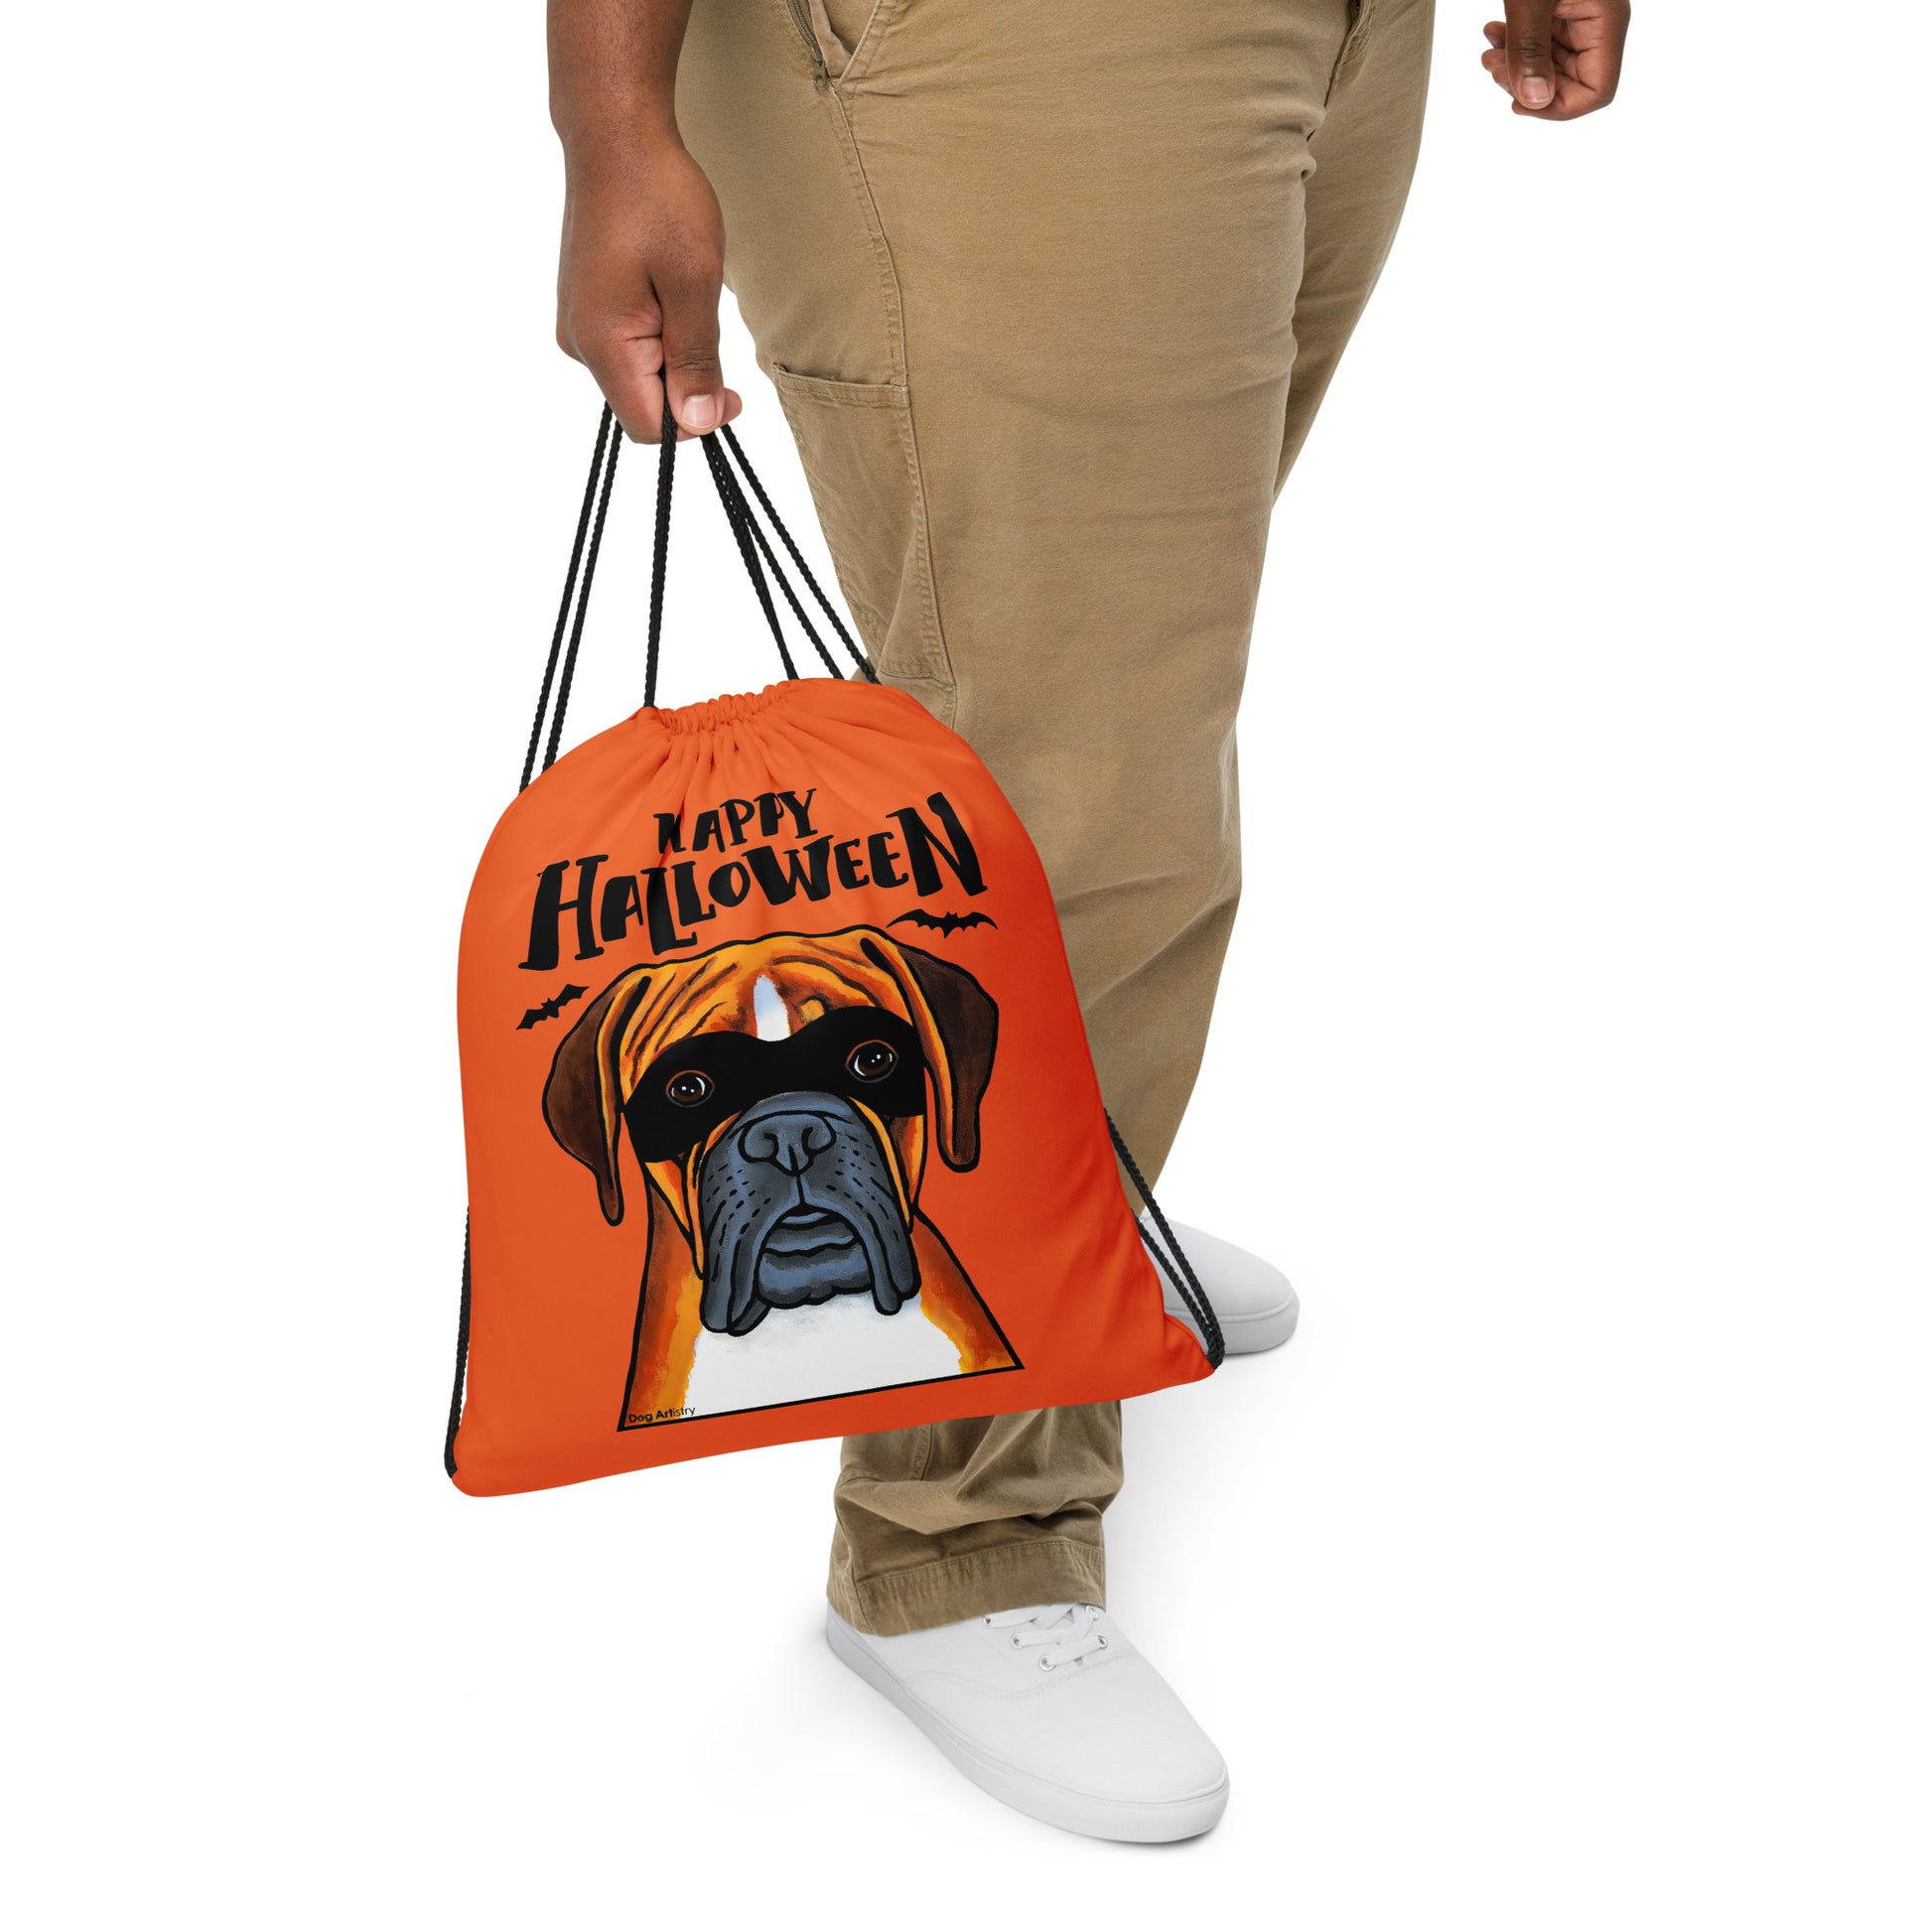 Happy Halloween Boxer Dog wearing mask Orange drawstring bag by Dog Artistry Halloween candy bag. Funny dog Halloween bag.